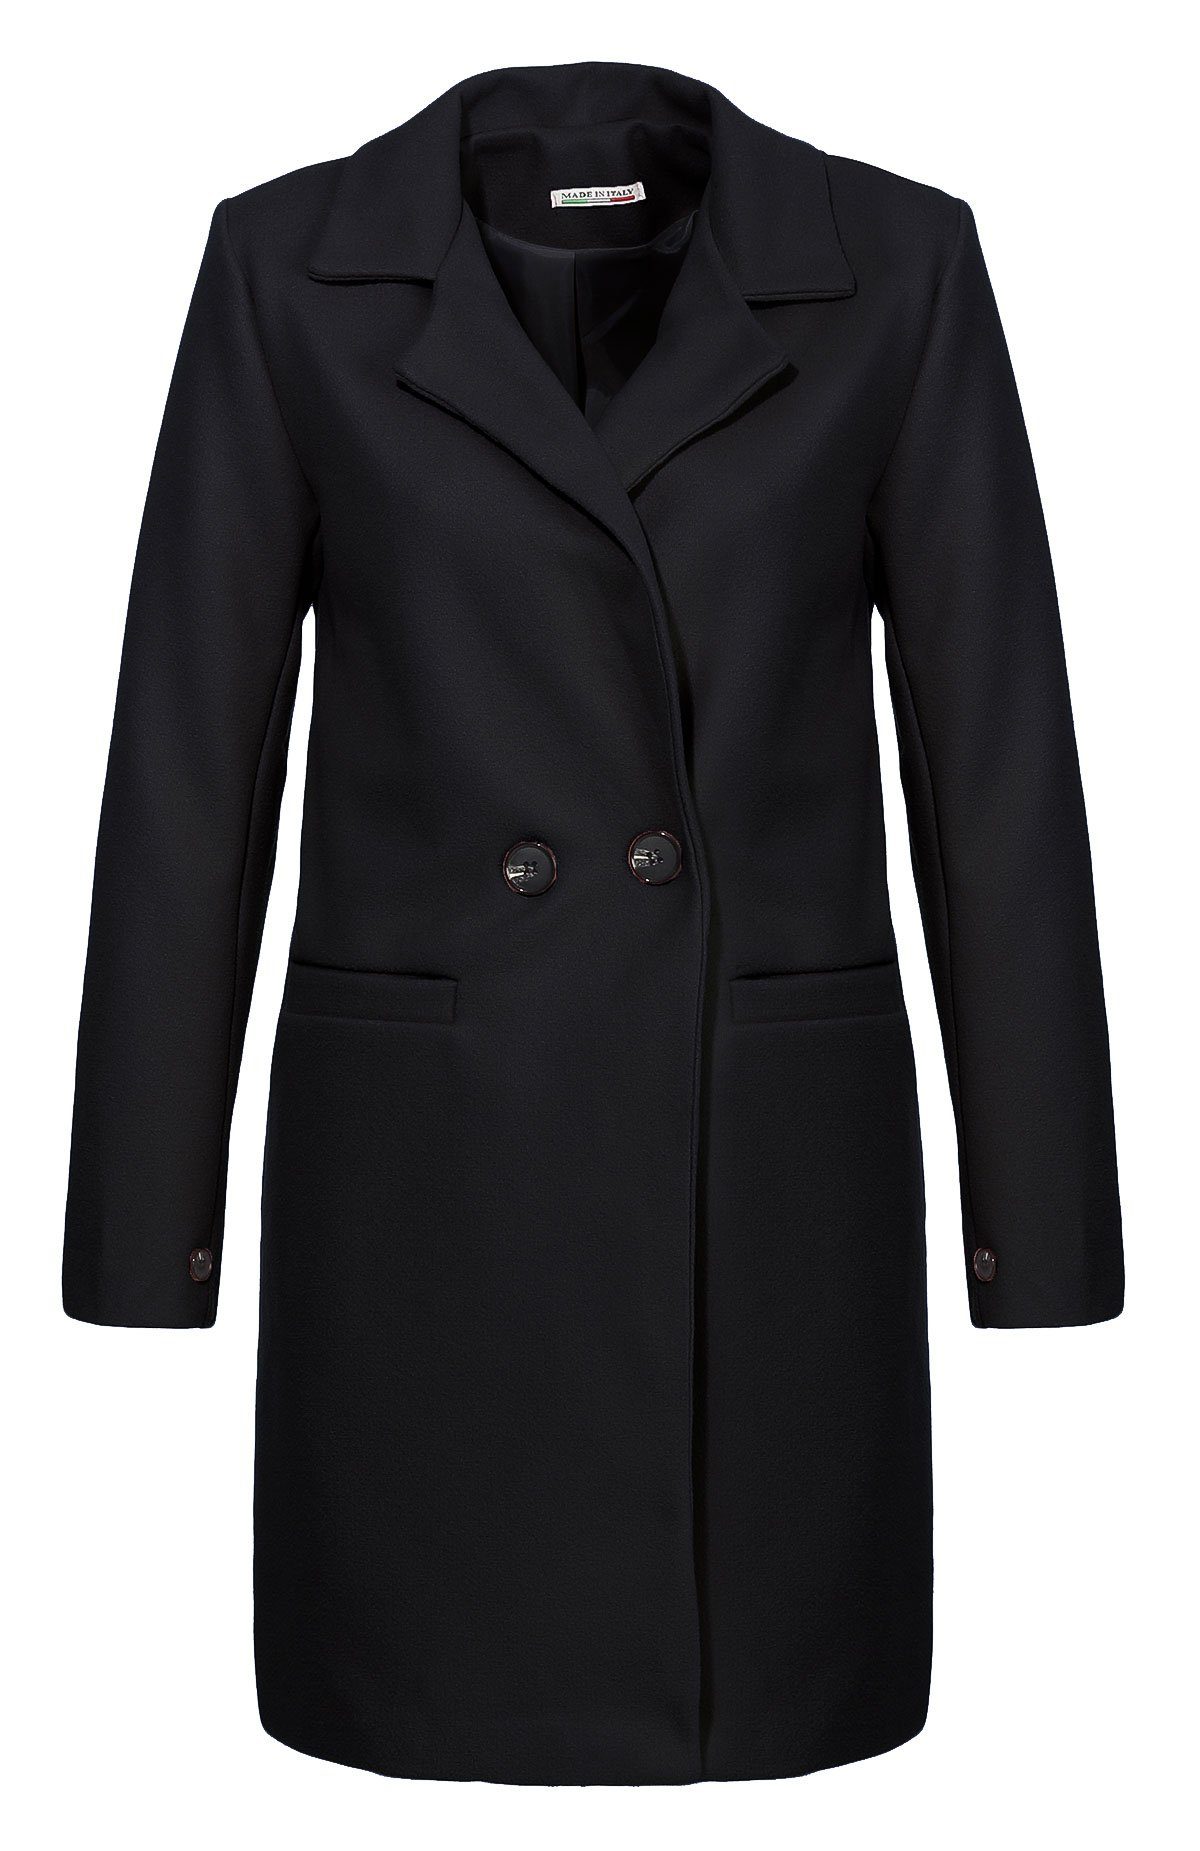 malito more Knopfverschluss Übergangsmantel schwarz Trenchcoat 19691 fashion than mit